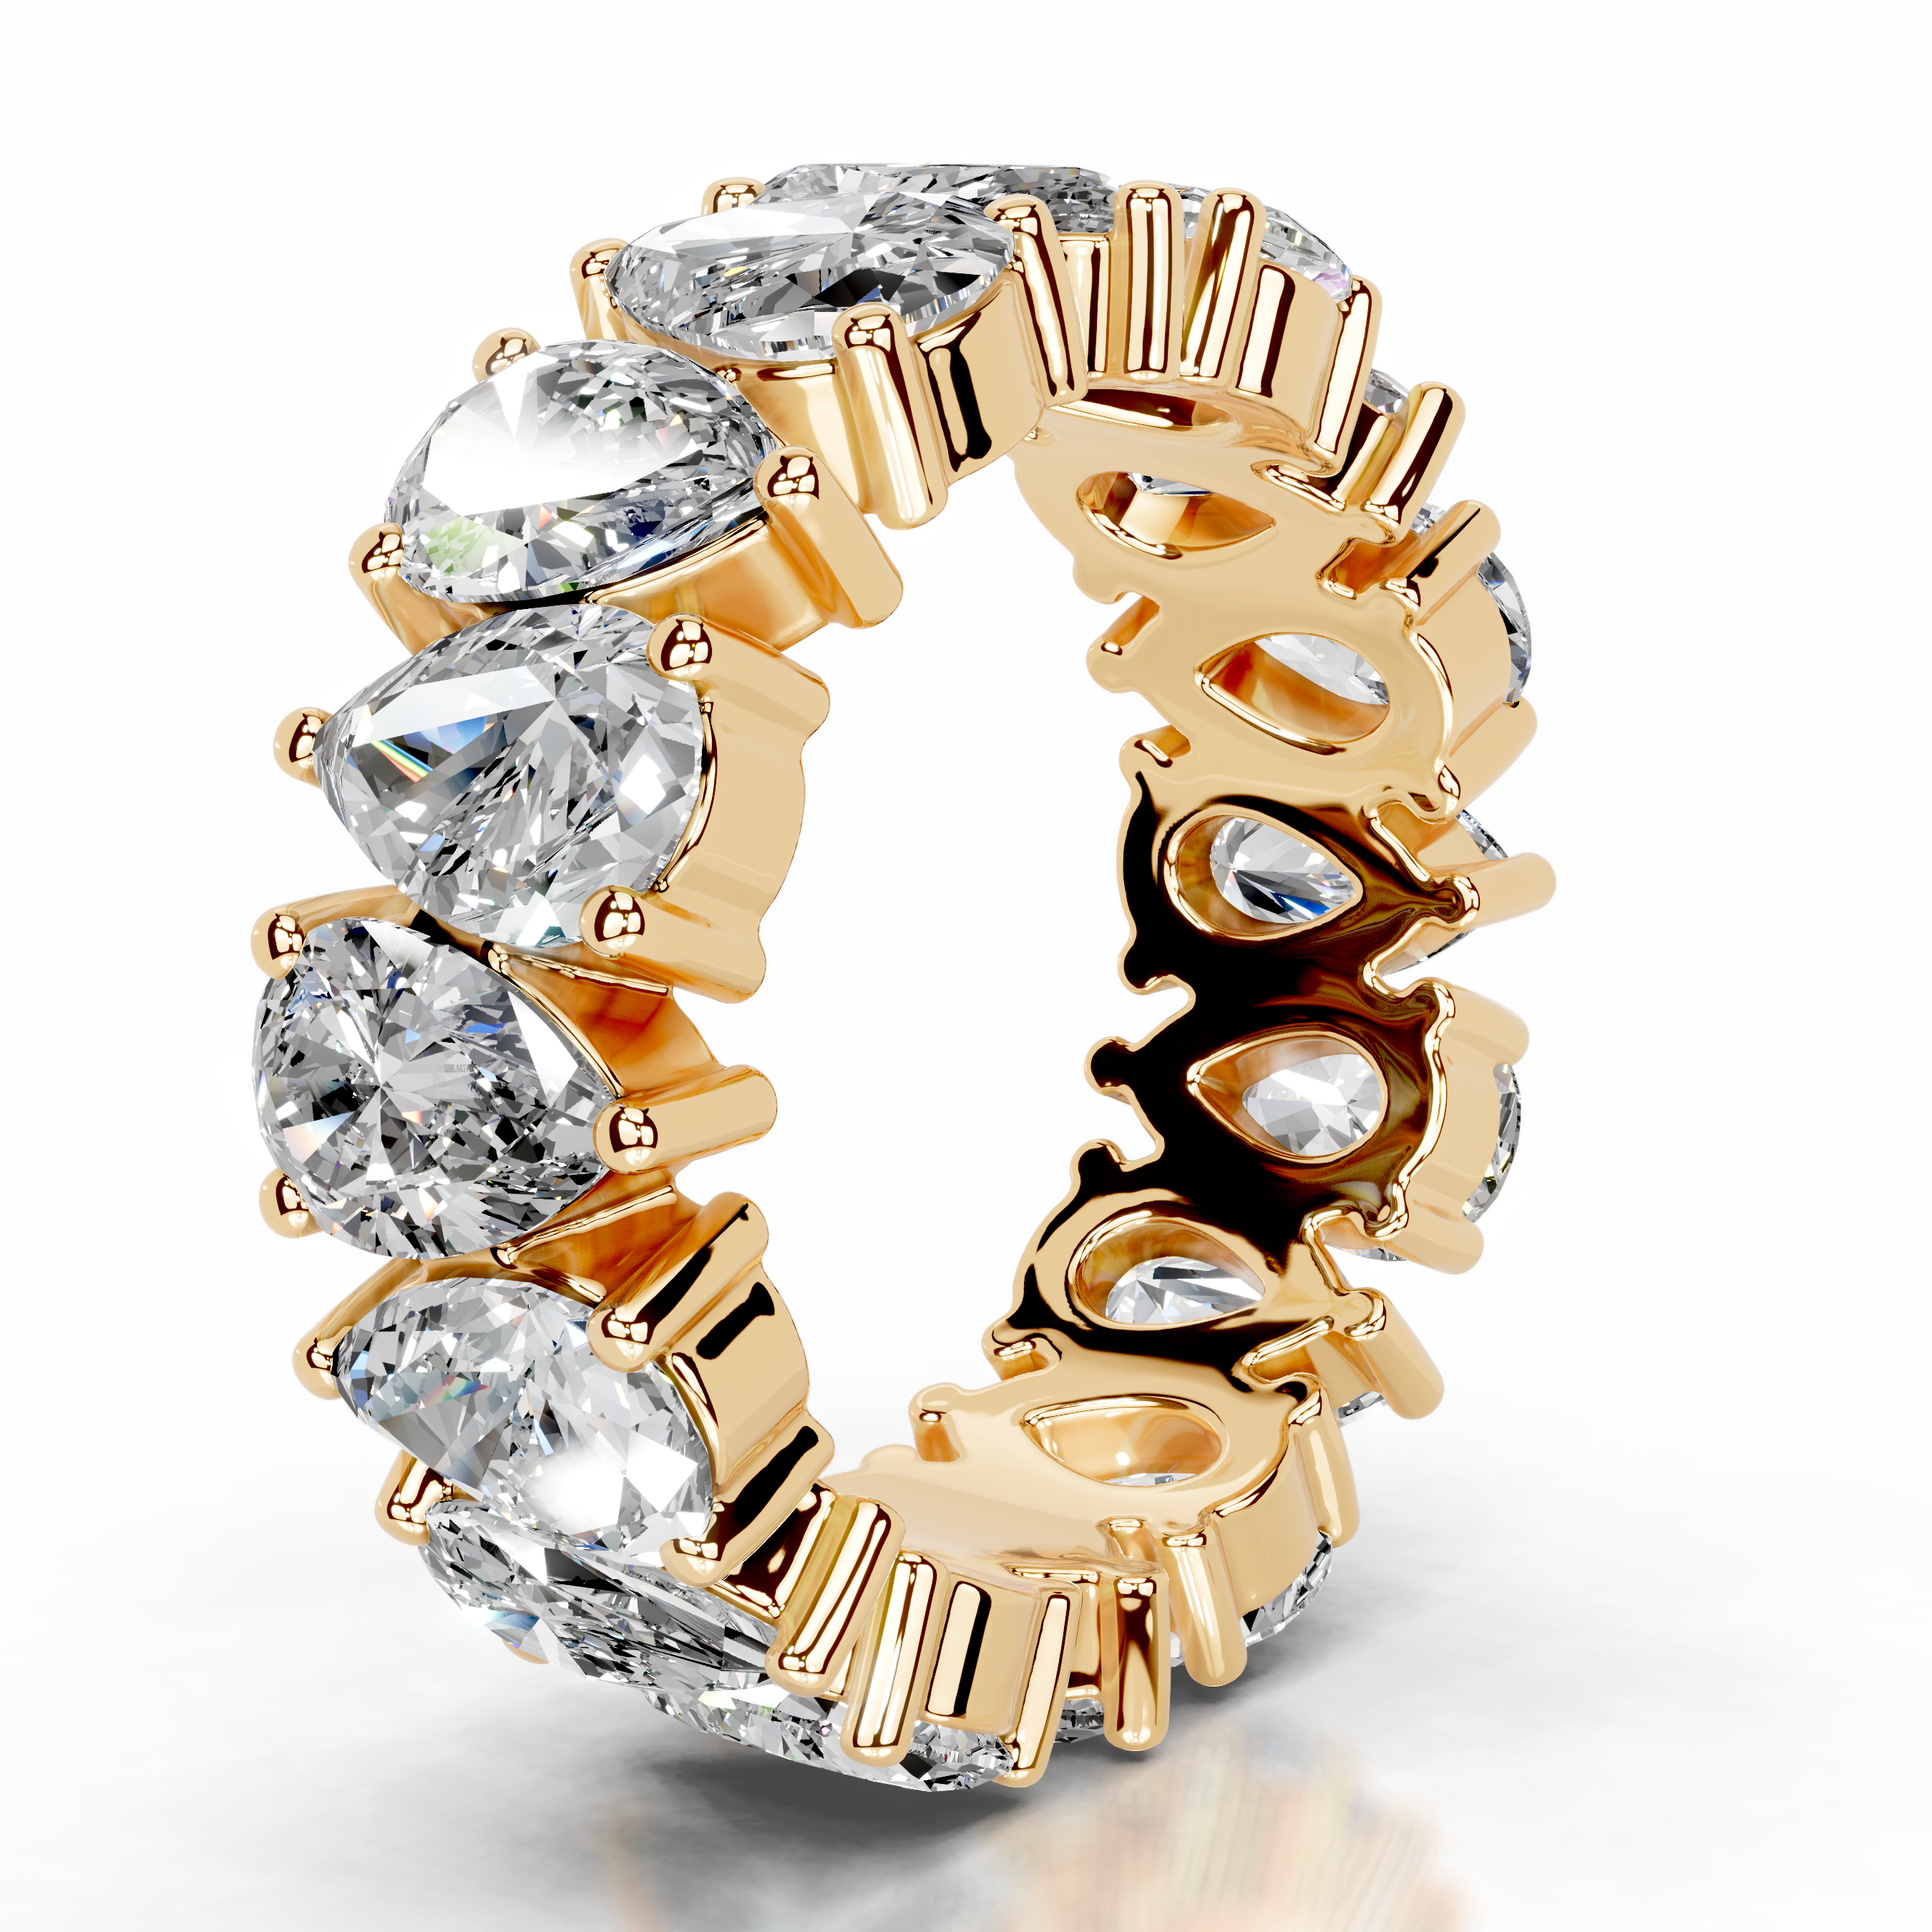 Sarah Diamond Wedding Ring   (6 Carat) -18K Yellow Gold